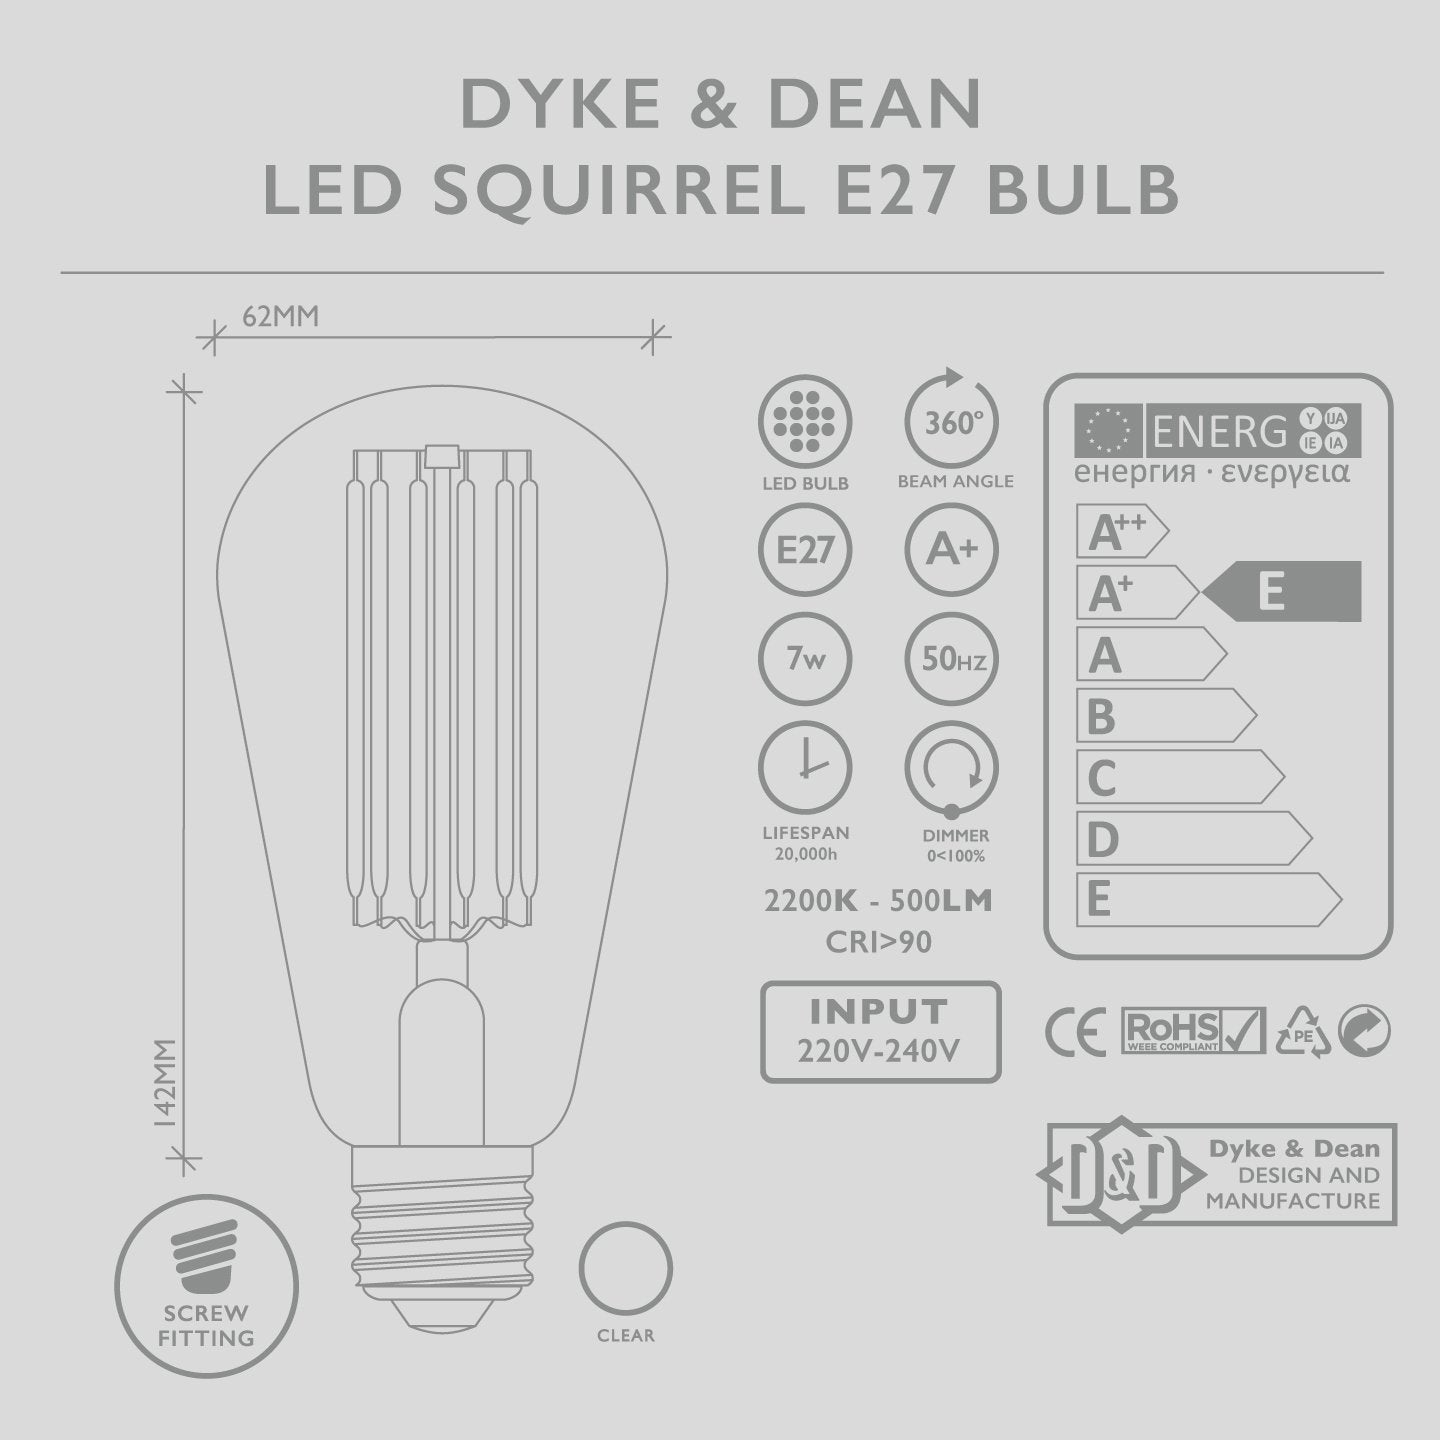 DYKE & DEAN LED SQUIRREL STYLE E27 BULB - DYKE & DEAN